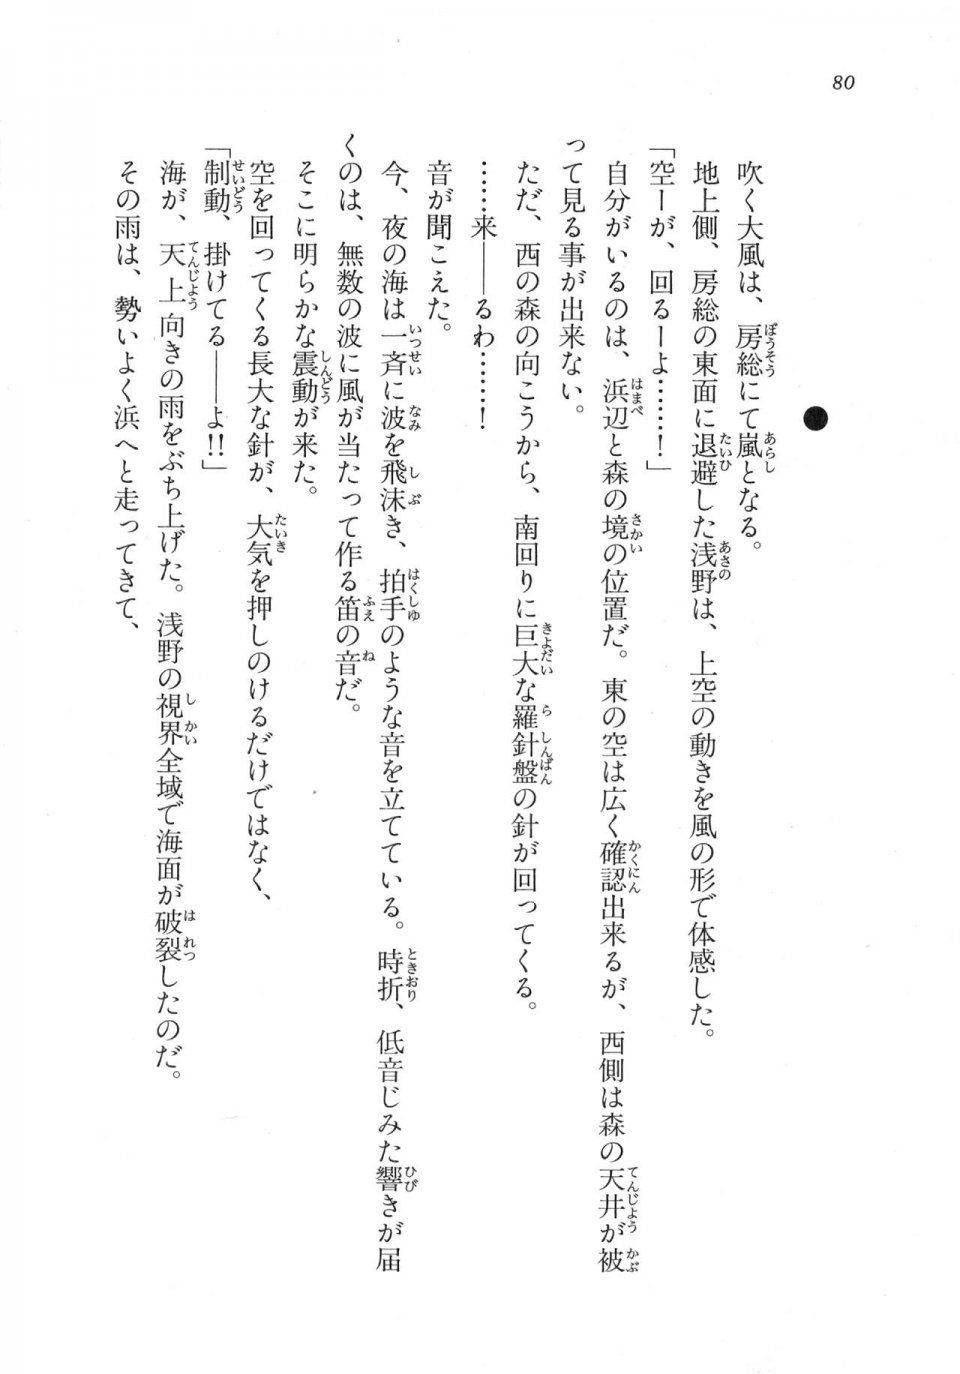 Kyoukai Senjou no Horizon LN Vol 18(7C) Part 1 - Photo #80